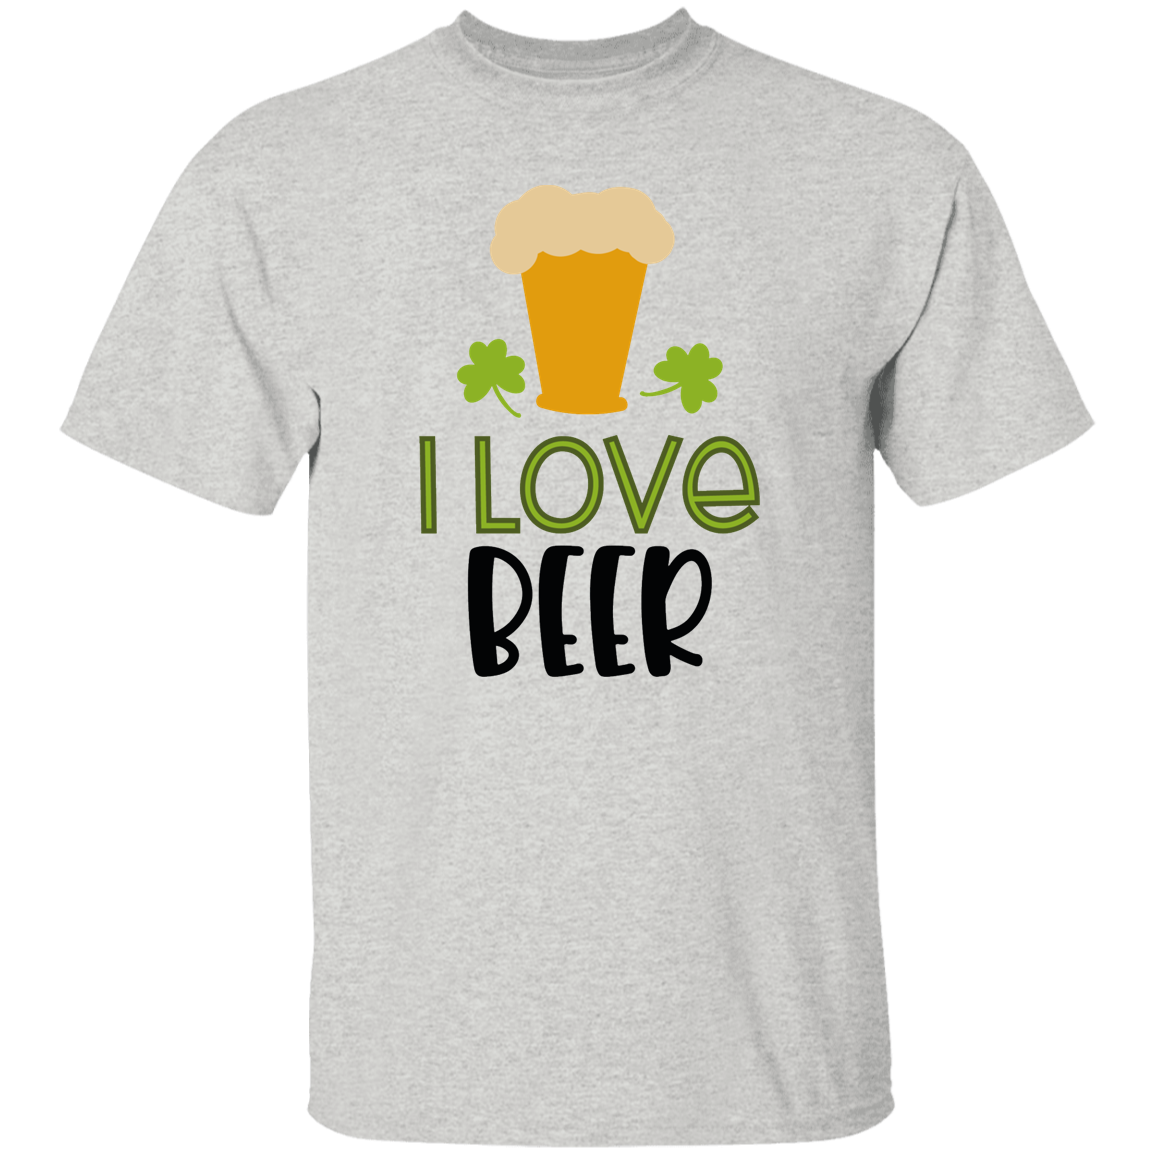 Beer 5.3 oz. T-Shirt